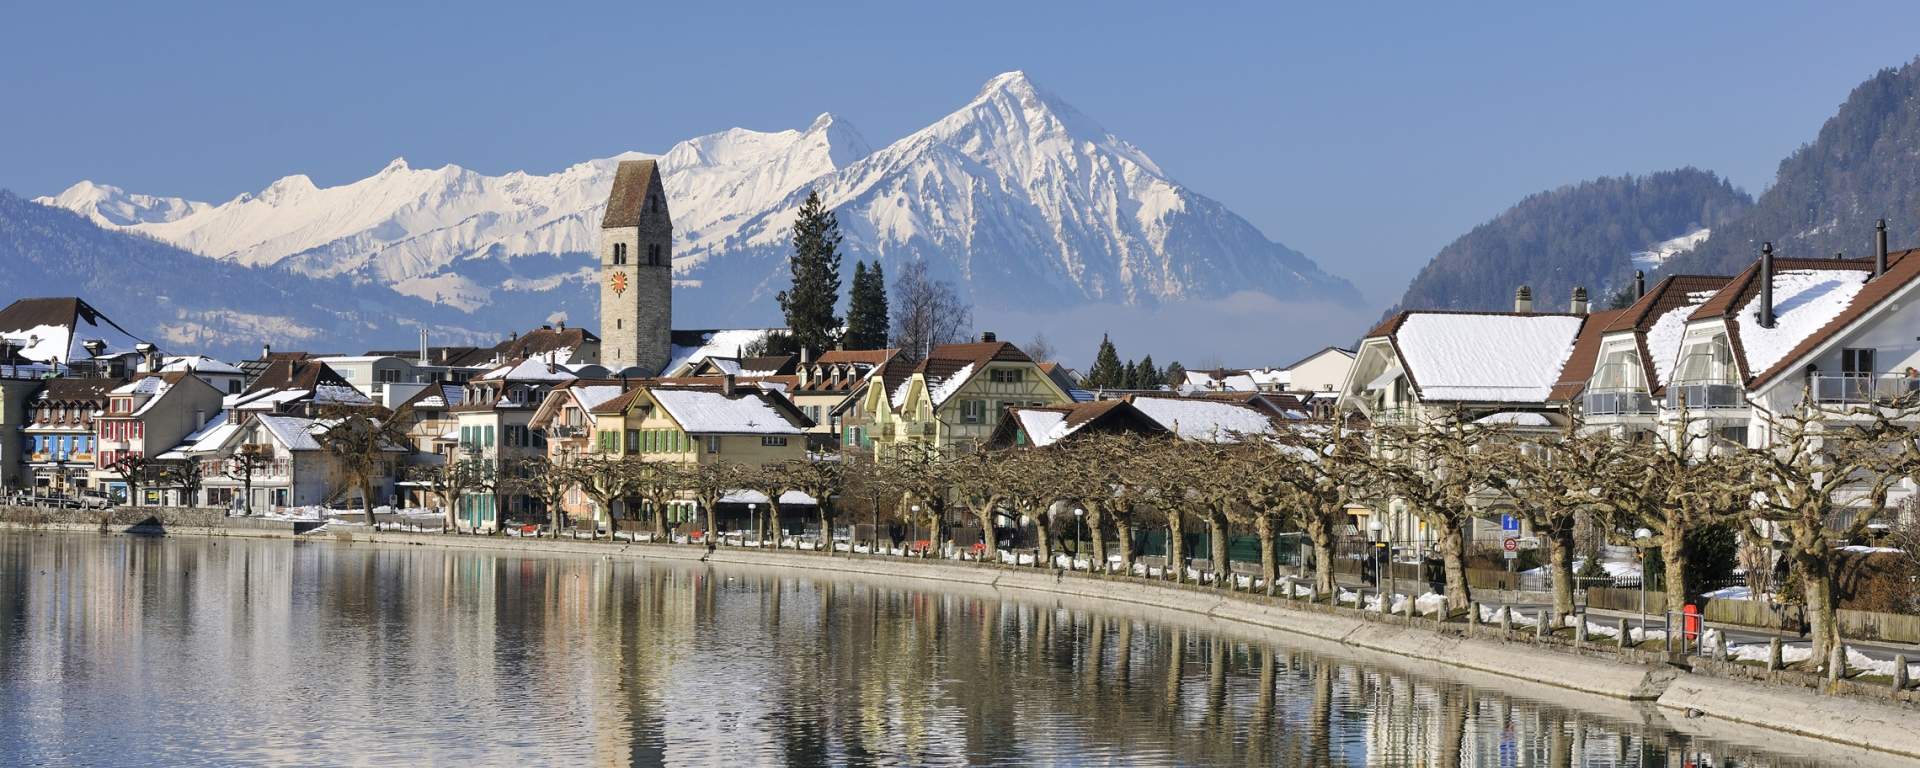 Christmas in Interlaken | Switzerland Travel Centre